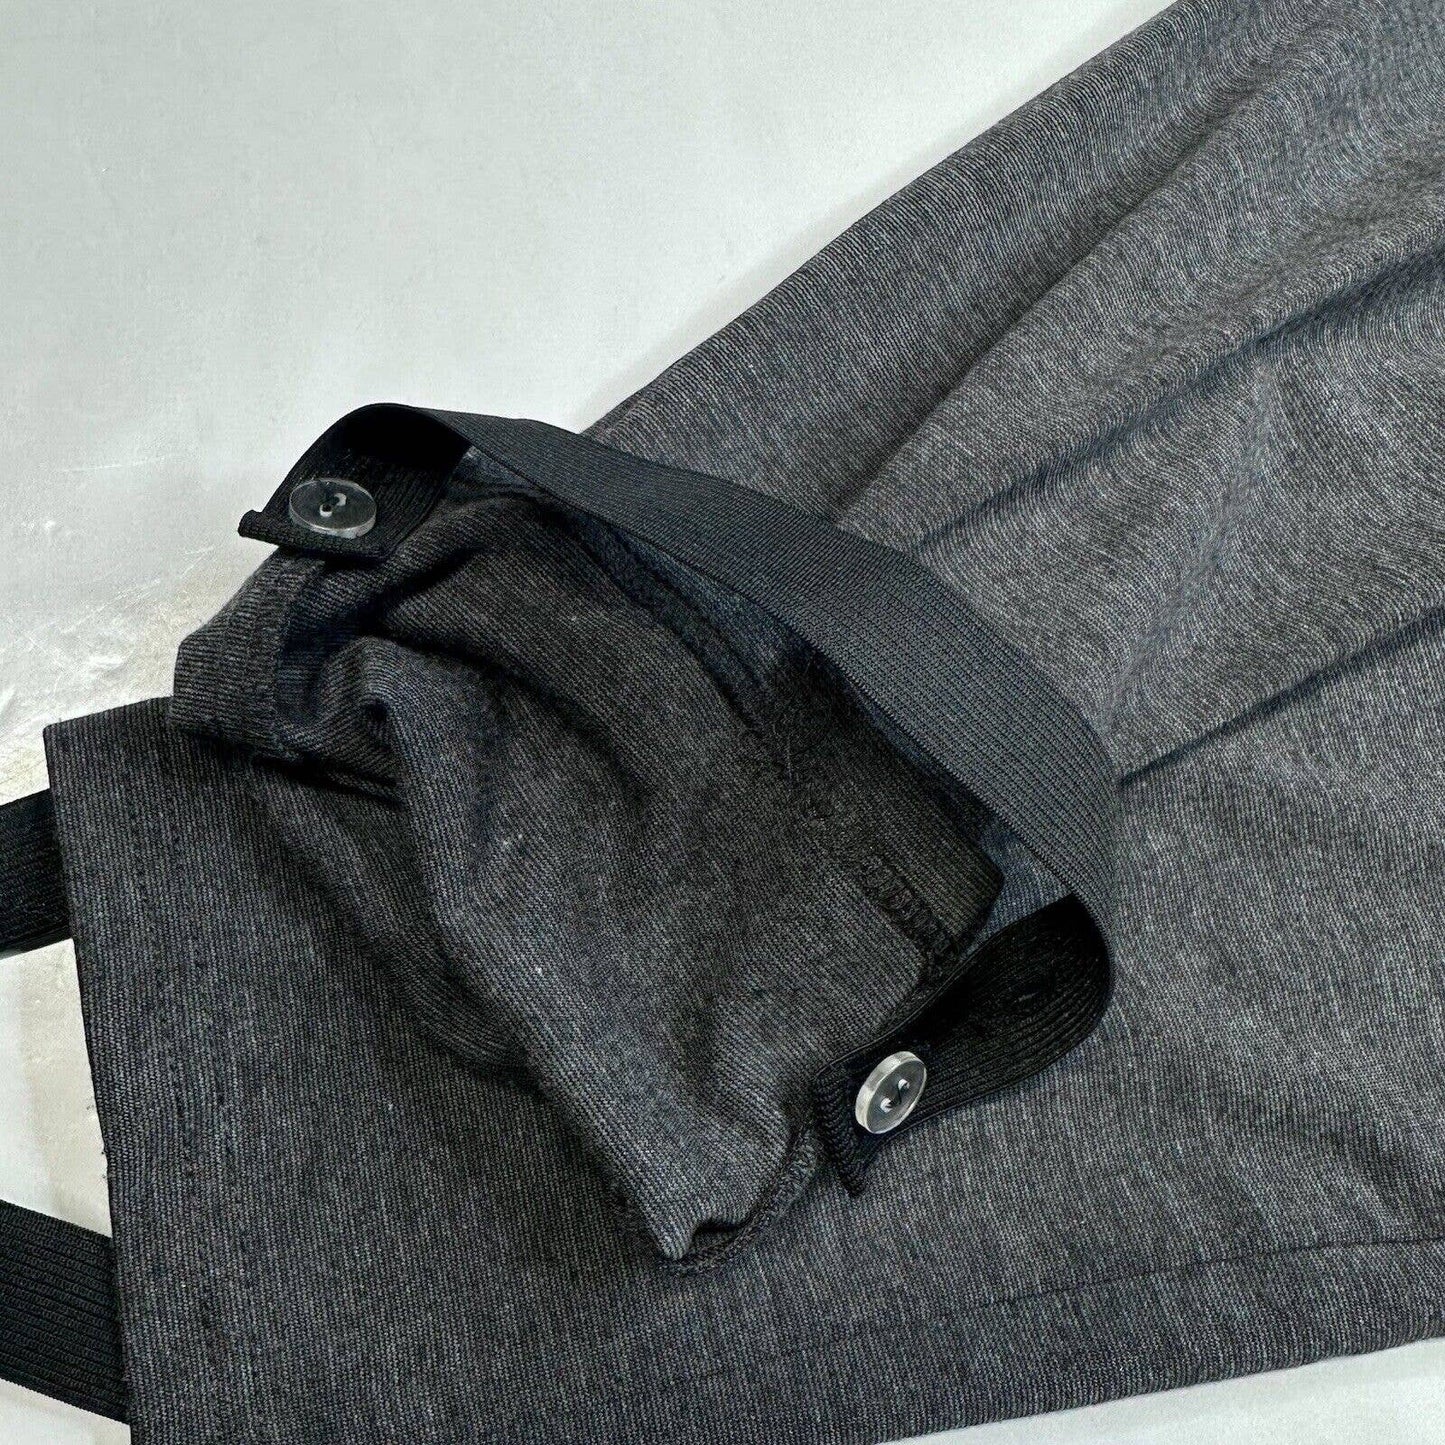 Soft Surroundings Skinny Ankle Pants PL Petite Large Gray Knit Stirrup Option